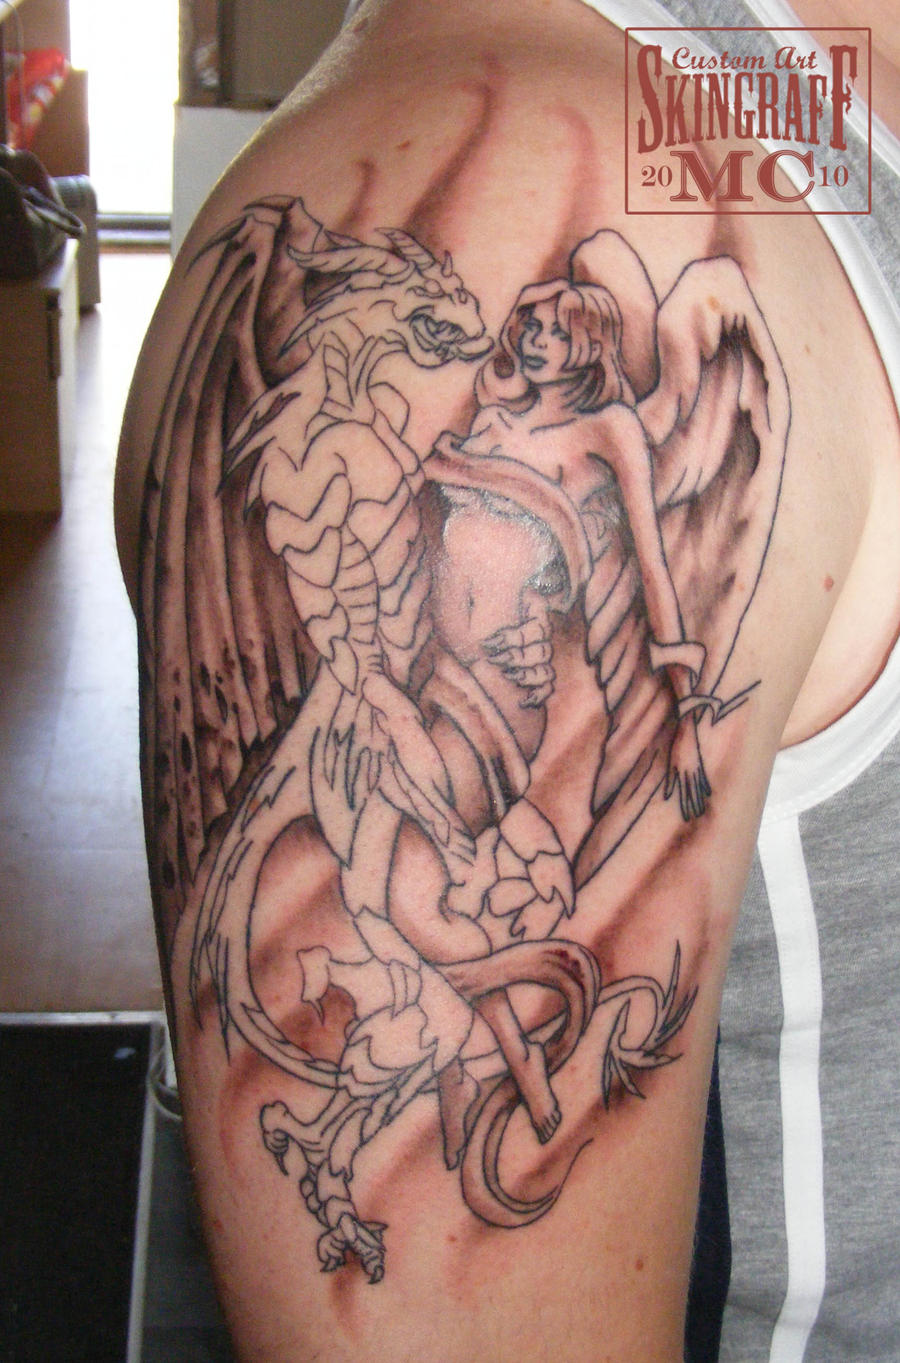 61529355 c67fa1e6cb m Dragon Tattoo designs: The legend behind tattoos